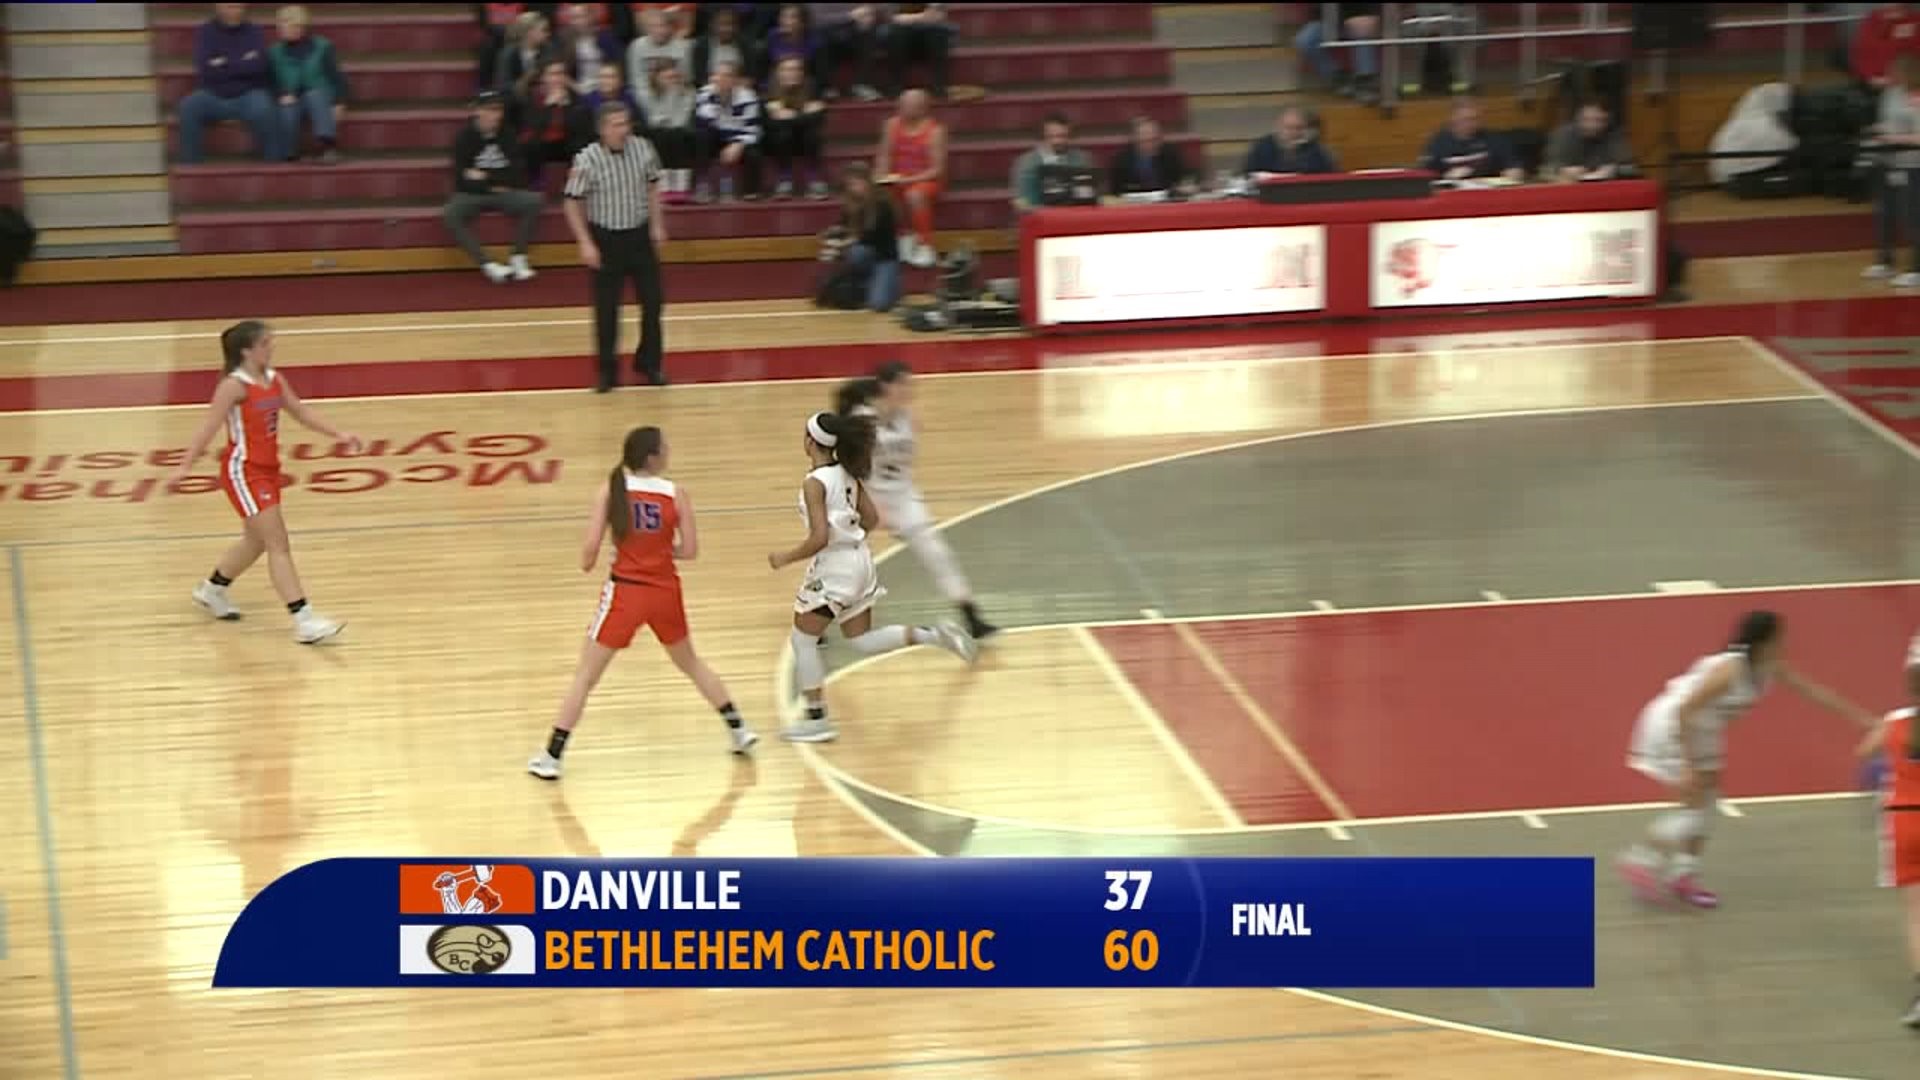 Danville Girls Fall to Bethlehem Catholic in State Tournament